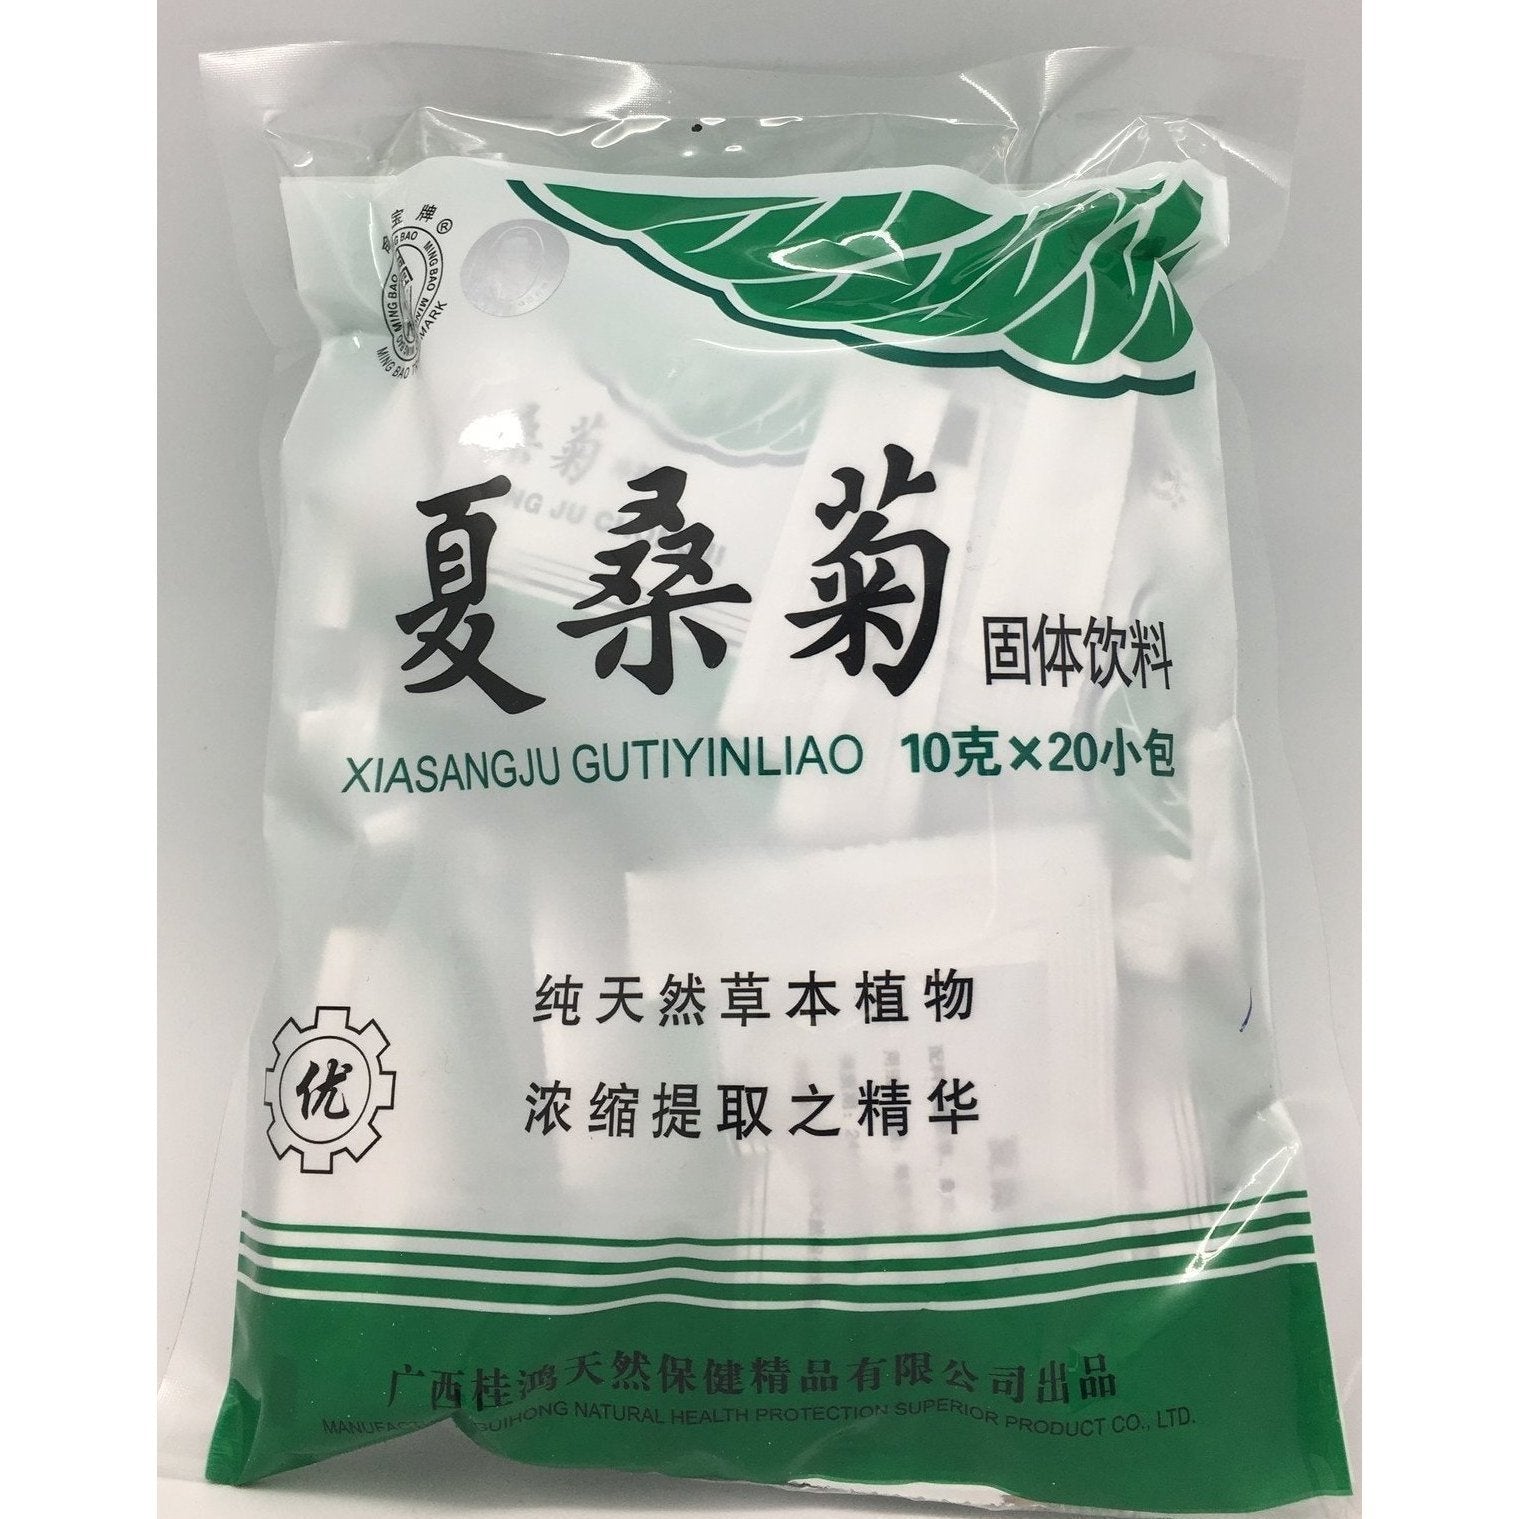 I032S MingBao Brand -XiaSangJu GuiTiYinLiao Beverage 20x10g - 50 bags / 1 CTN - New Eastland Pty Ltd - Asian food wholesalers